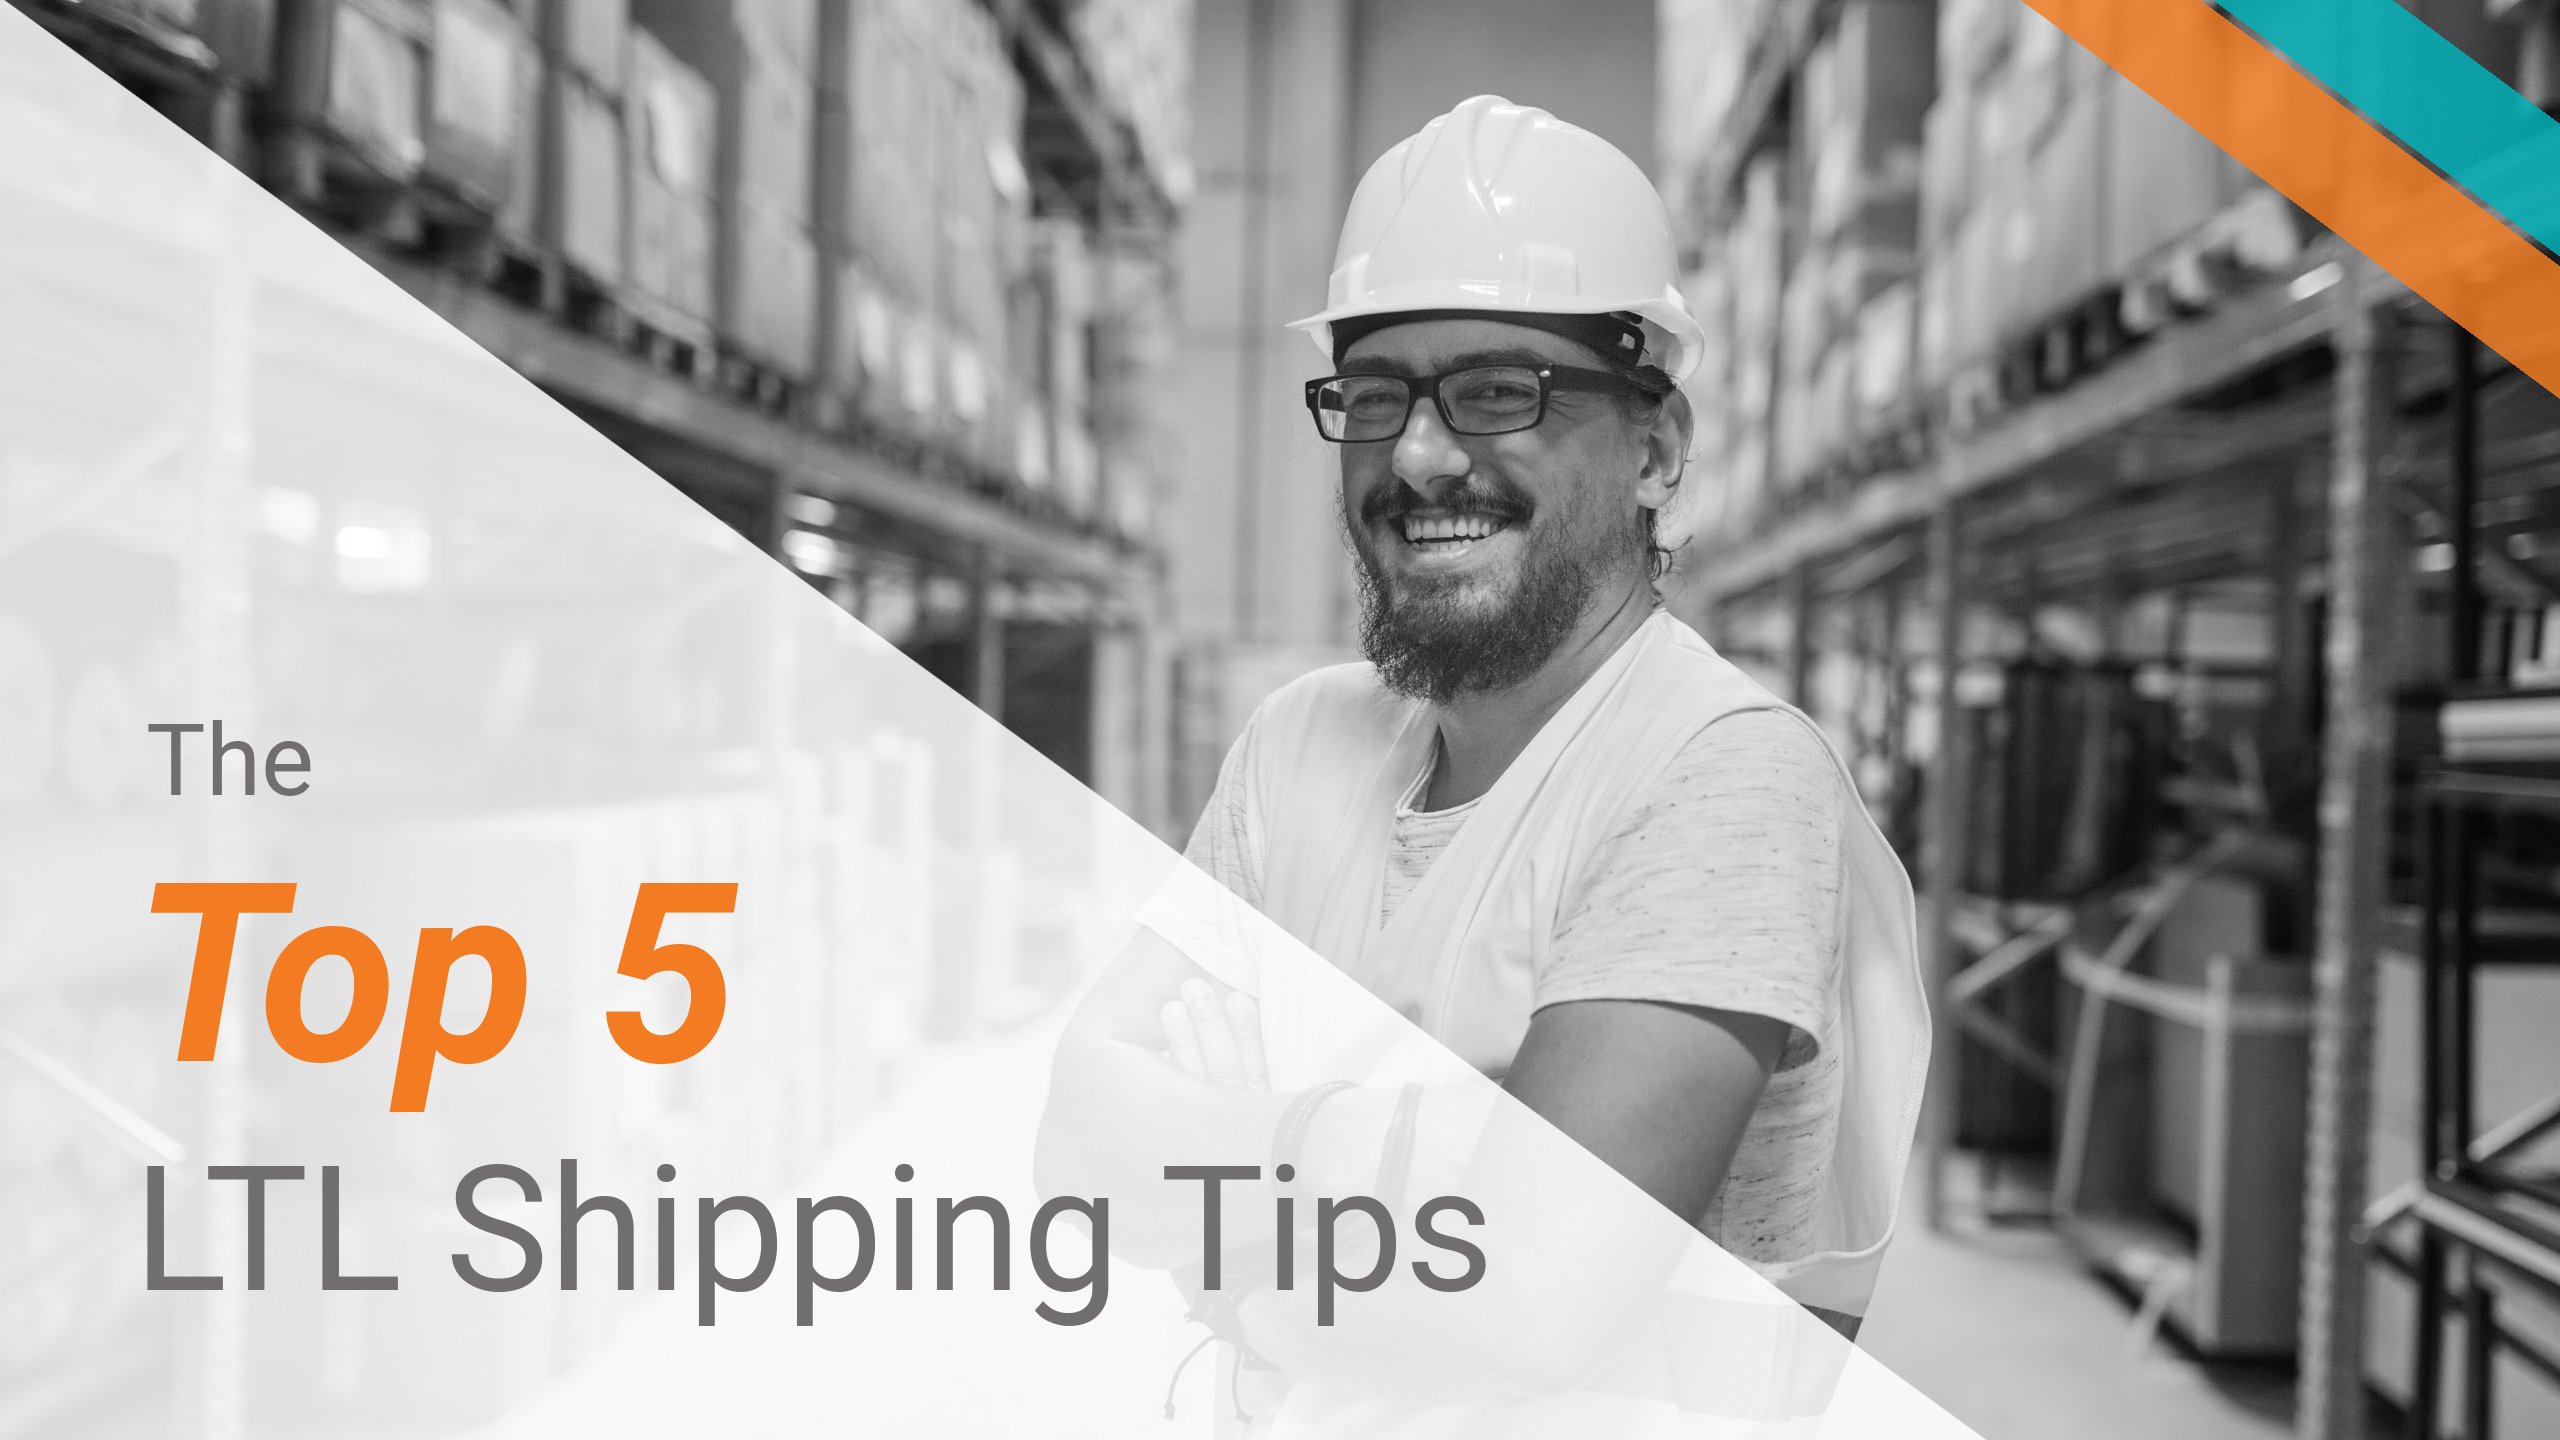 The Top 5 LTL Shipping Tips